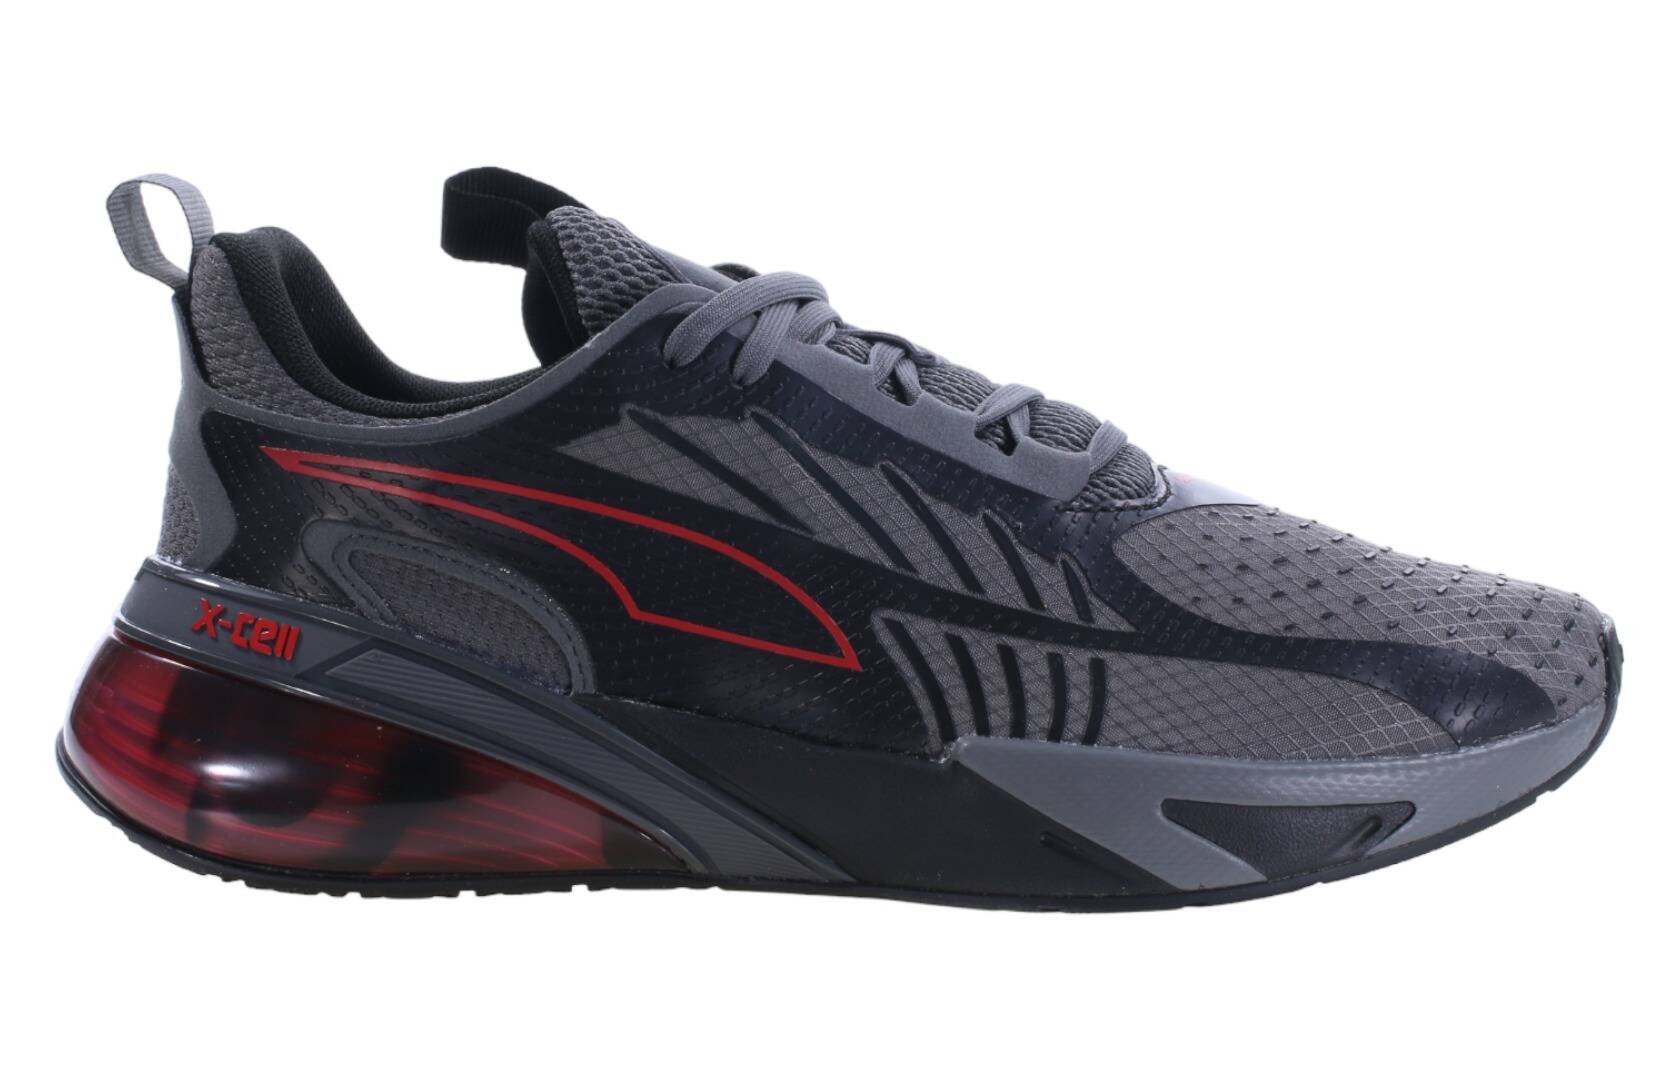 Puma X-Cell Action Soft Focus shoes 377930 02